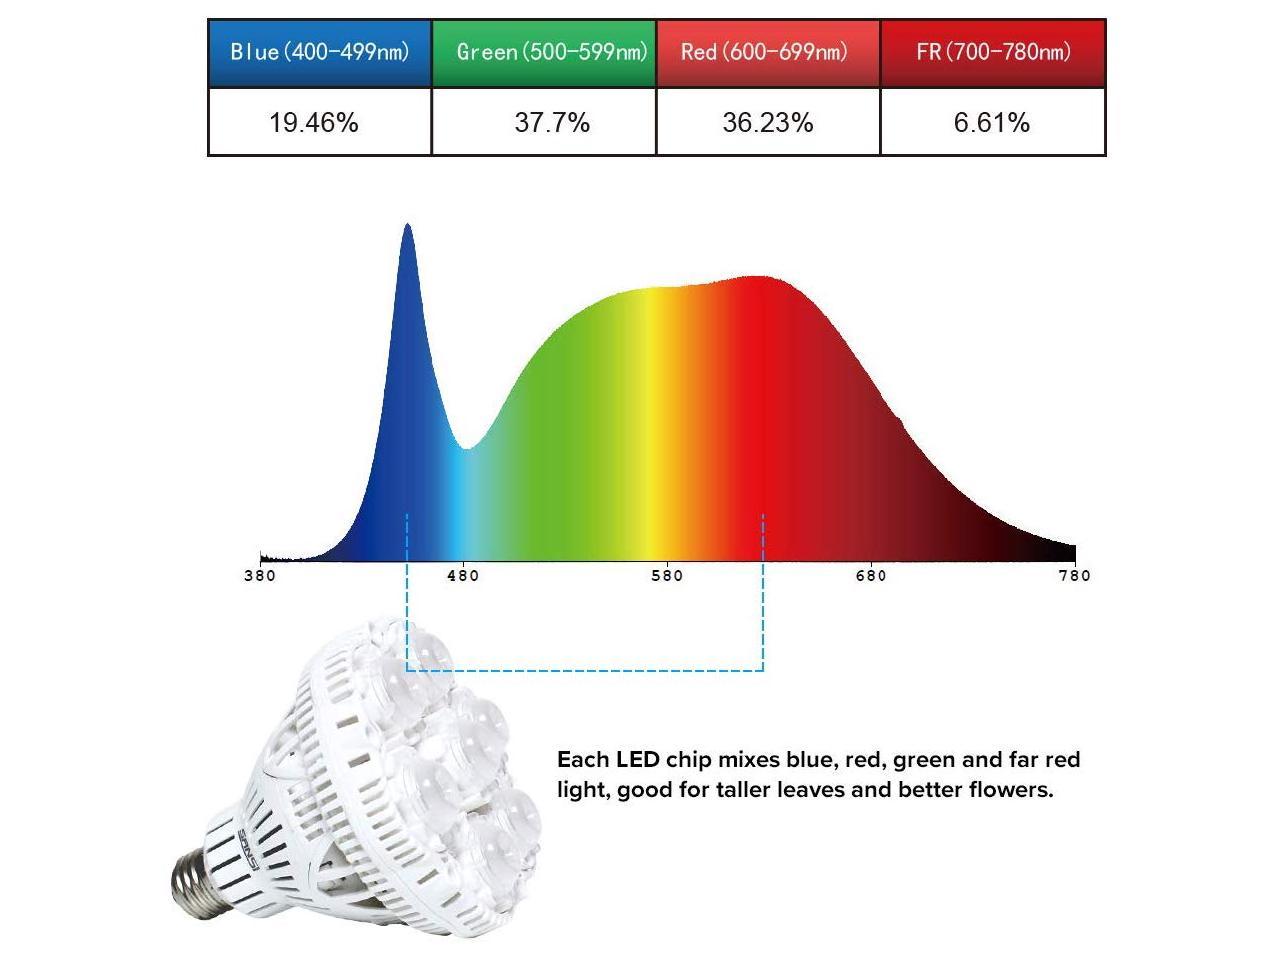 Светодиодная лампа полного спектра. RGB спектр светодиода Full Spectrum. Фито-светодиод 400-840 НМ для растений спектр излучения. Светодиодная лампа полного спектра для растений. Спектр лампы полного спектра.